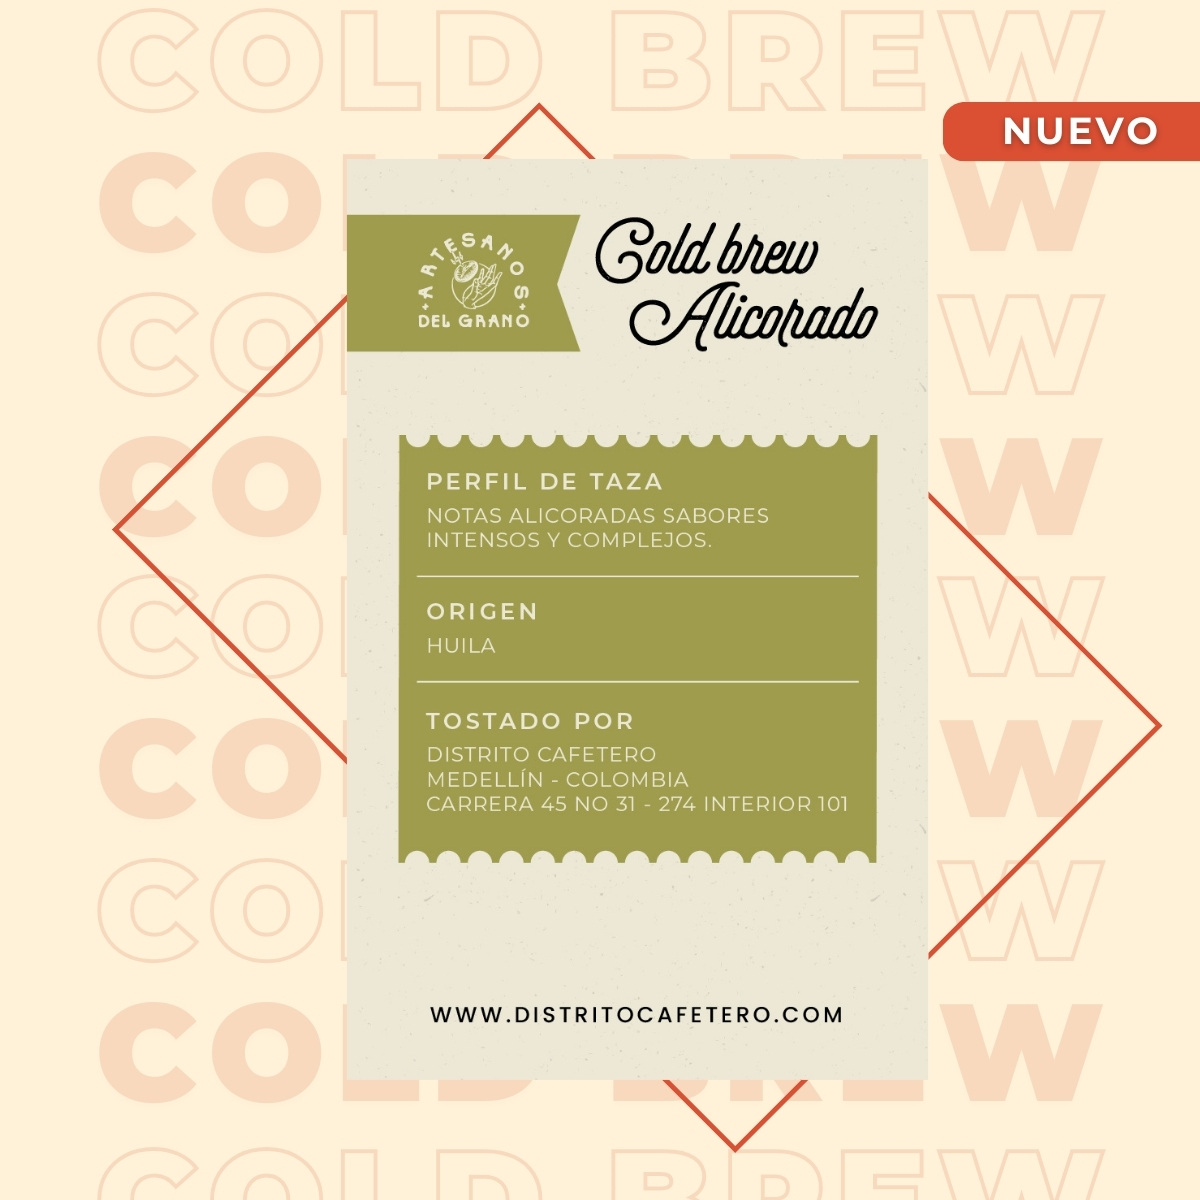 cafe frio Cold brew alicorado sabor1 - Café Especial- Cold Brew Alicorado